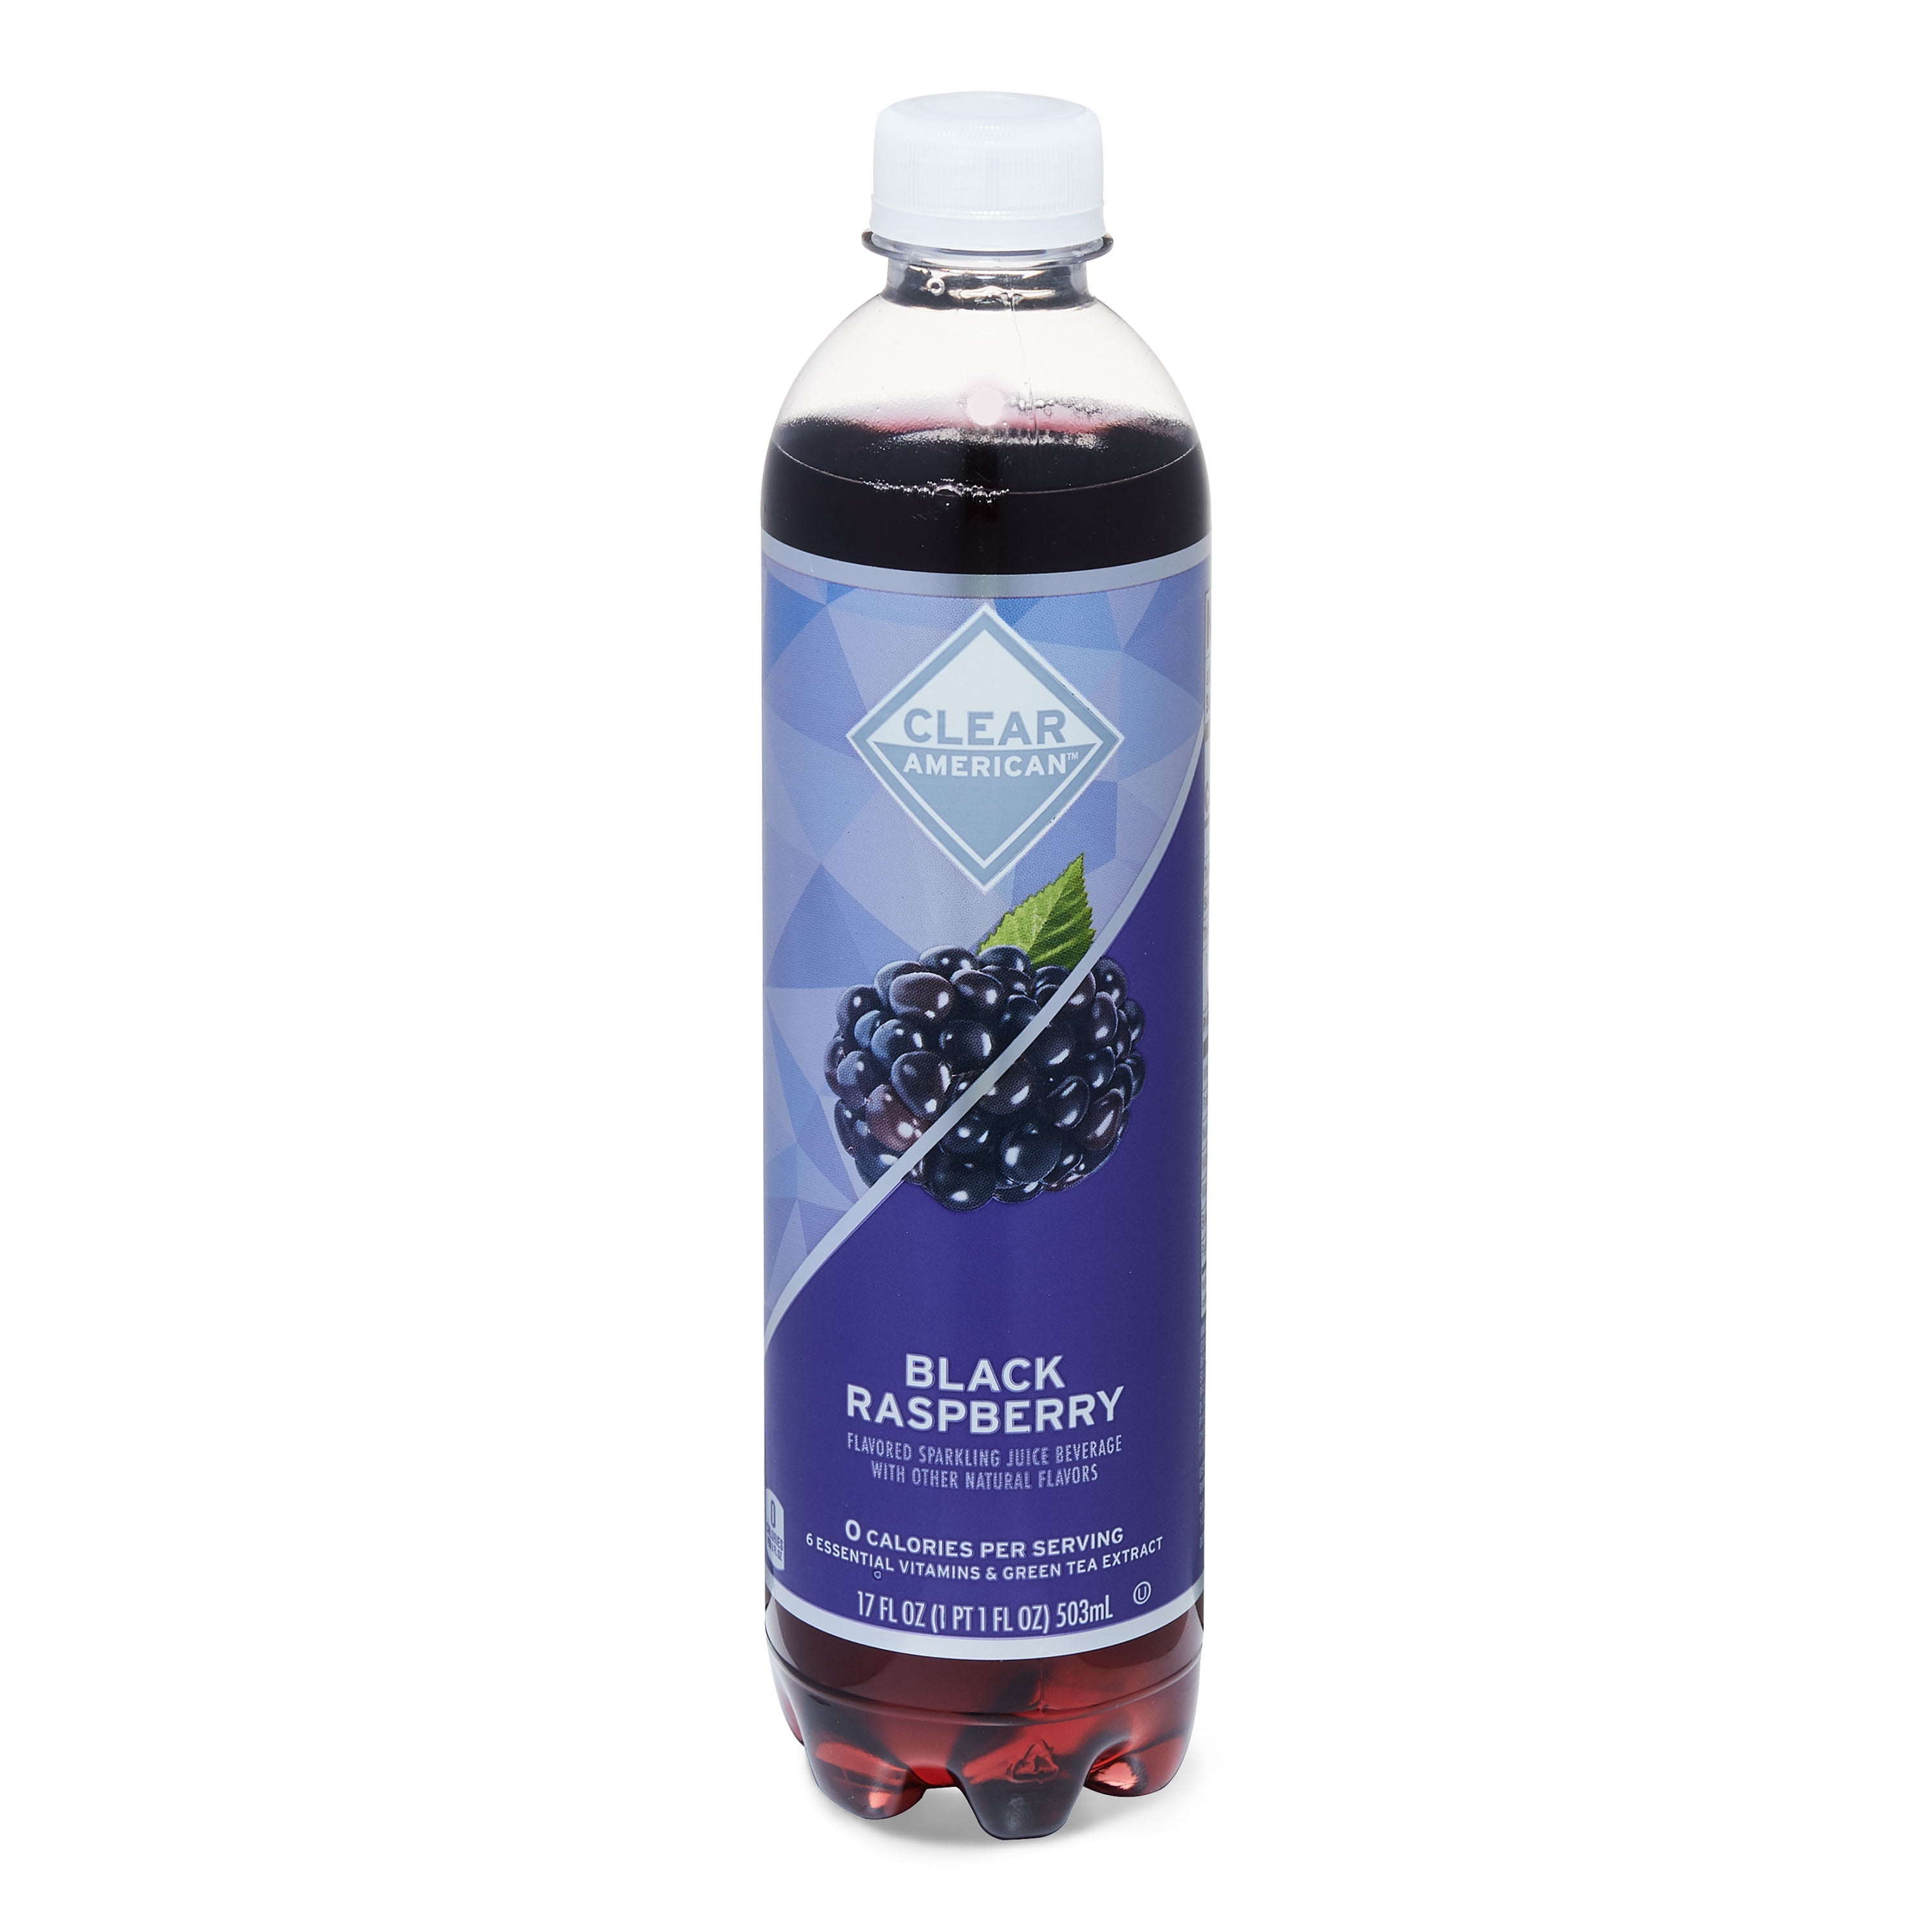 Clear American Ice Black Raspberry Flavored Sparkling Juice Beverage 17 Fl Oz Walmart Com Walmart Com